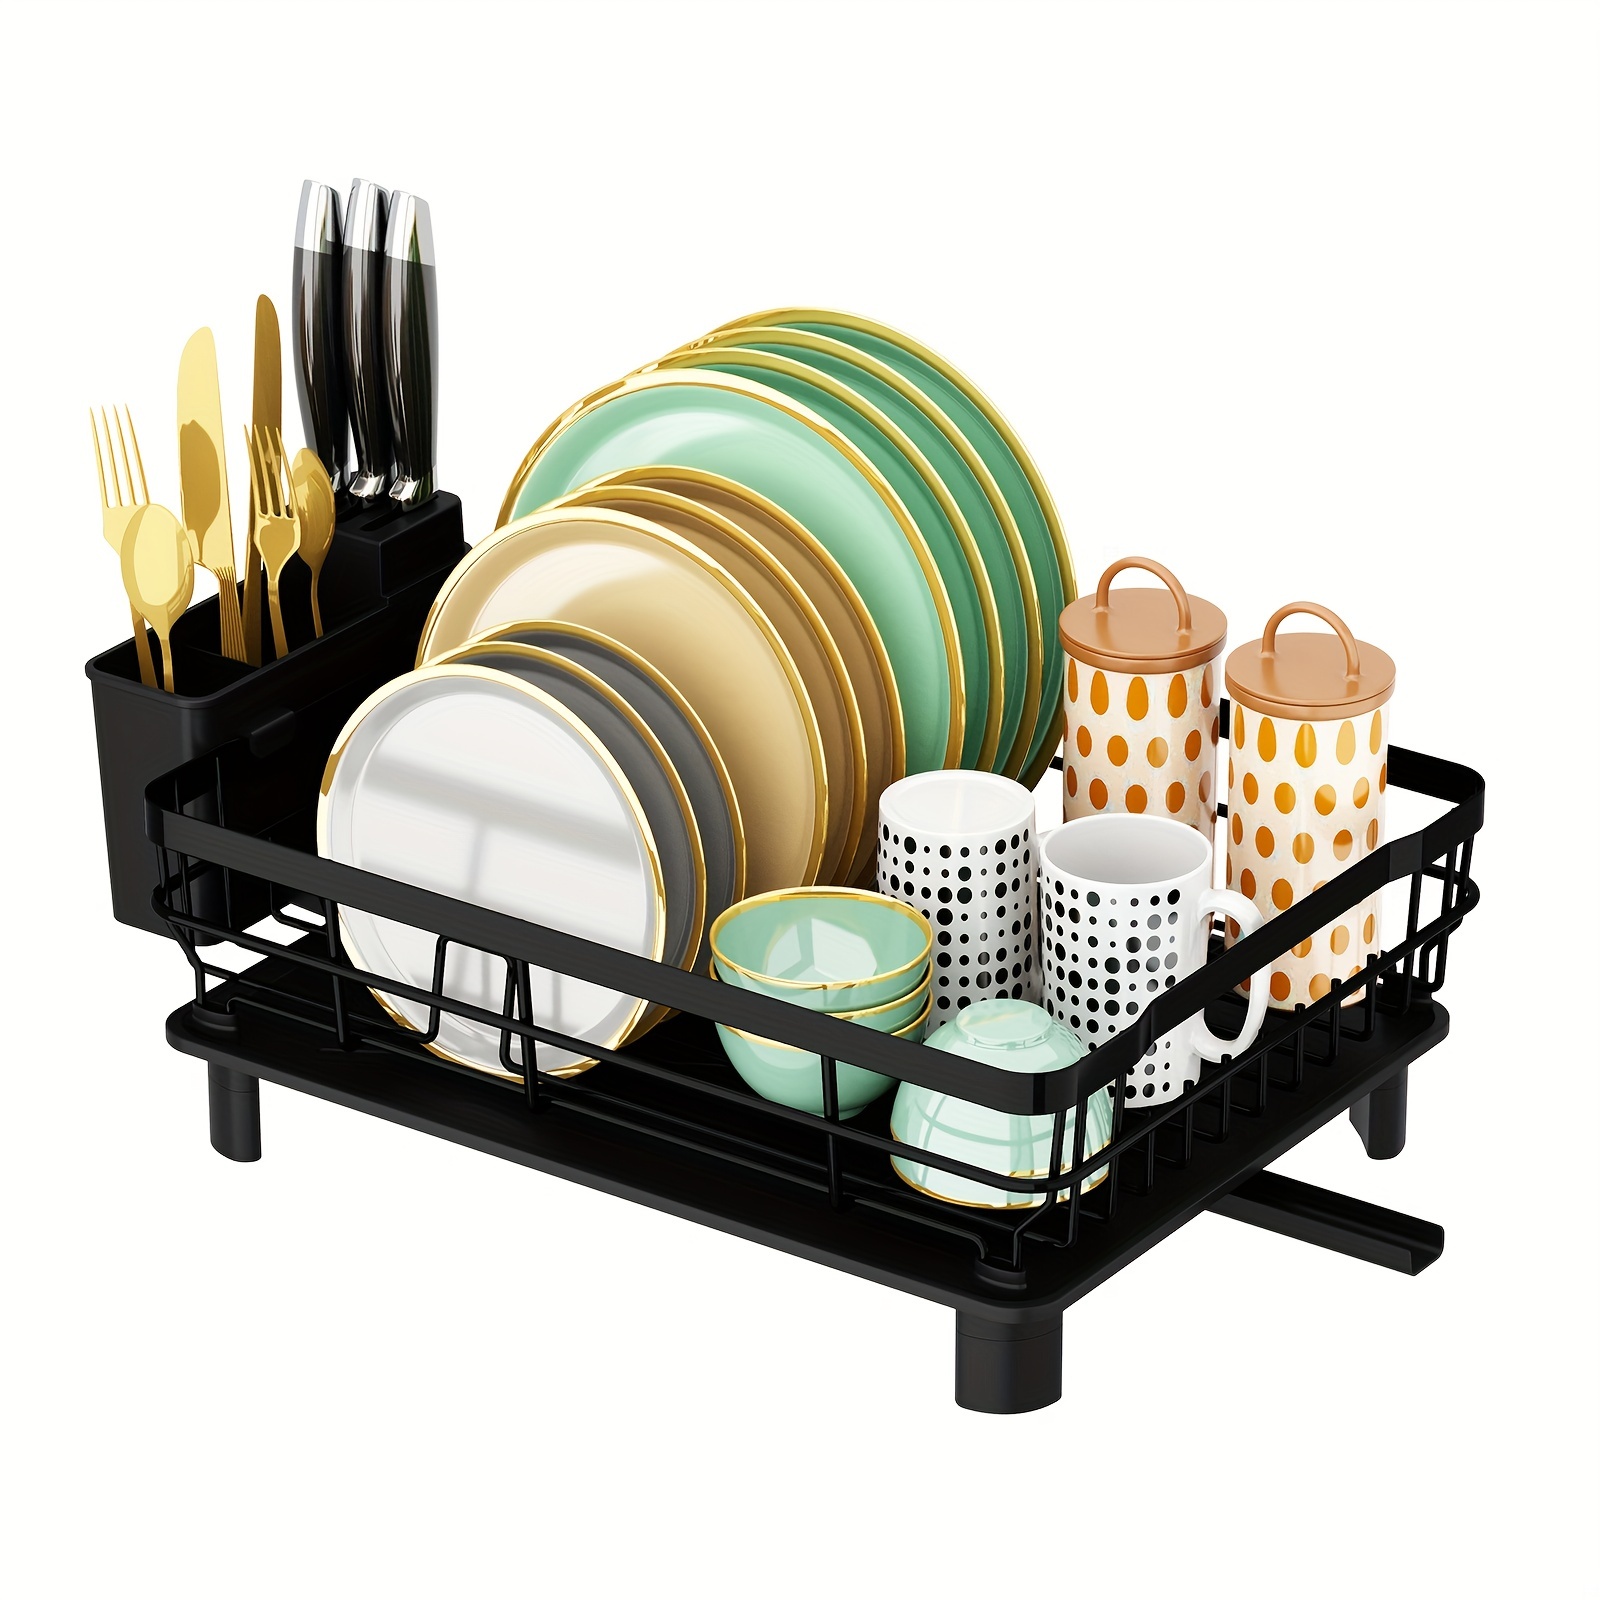 Kitsure Dish Drying Rack, Multifunctional Dish Rack, Rustproof Kitchen Dish  Drying Rack with Drainboard, Space-Saving 2-Tier Dish Drying Rack with a